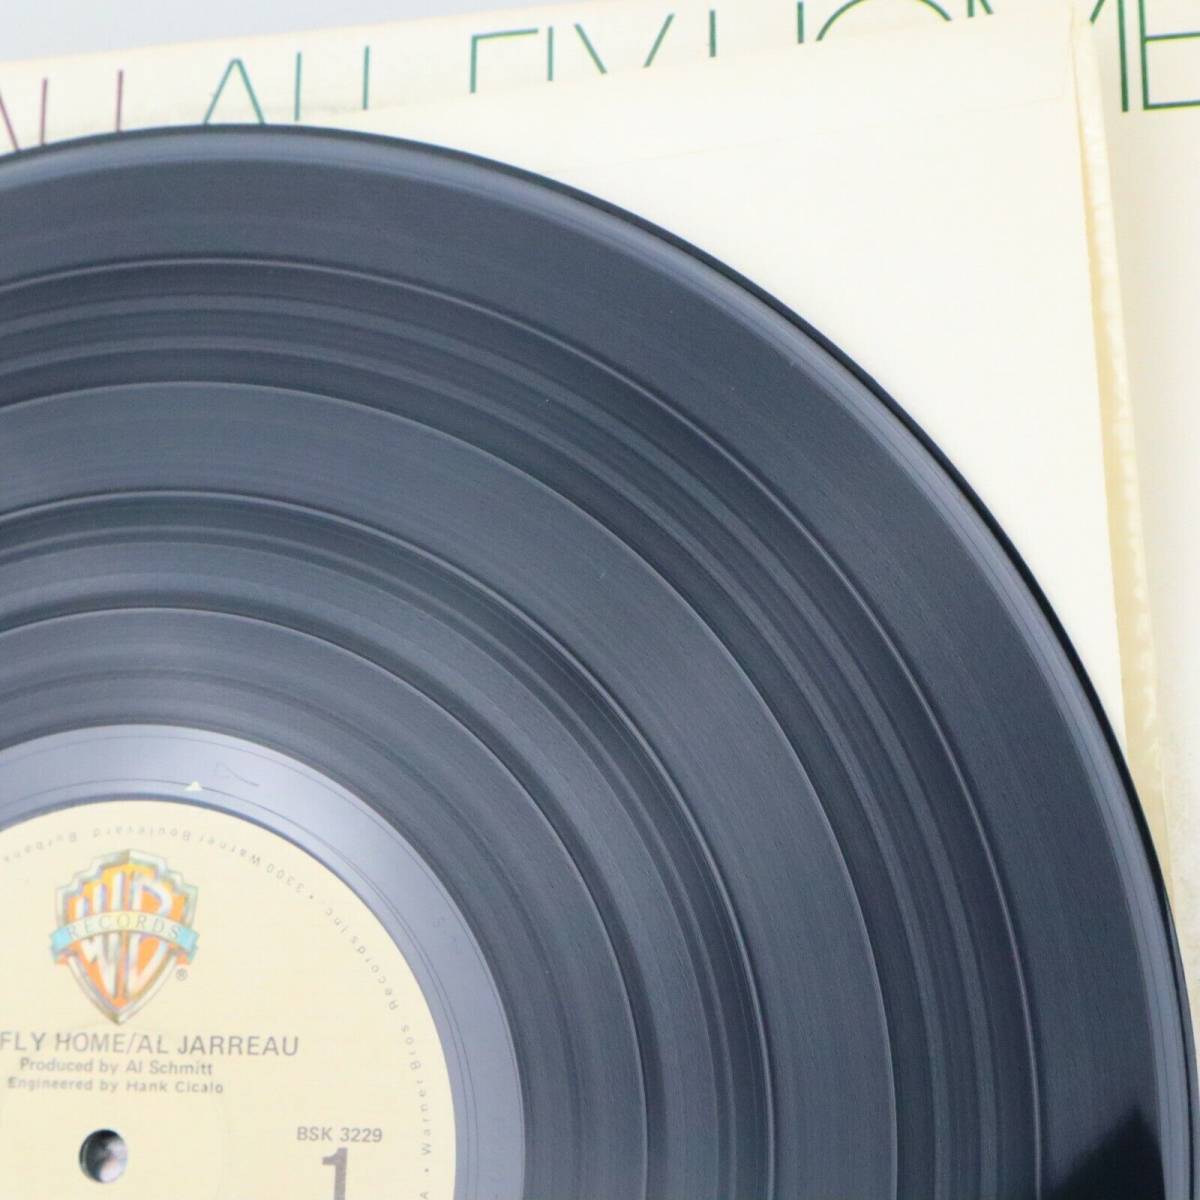 Al Jarreau All Fly Home 12" LP BSK 3229 Warner Bros. Records 1978 海外 即決 7